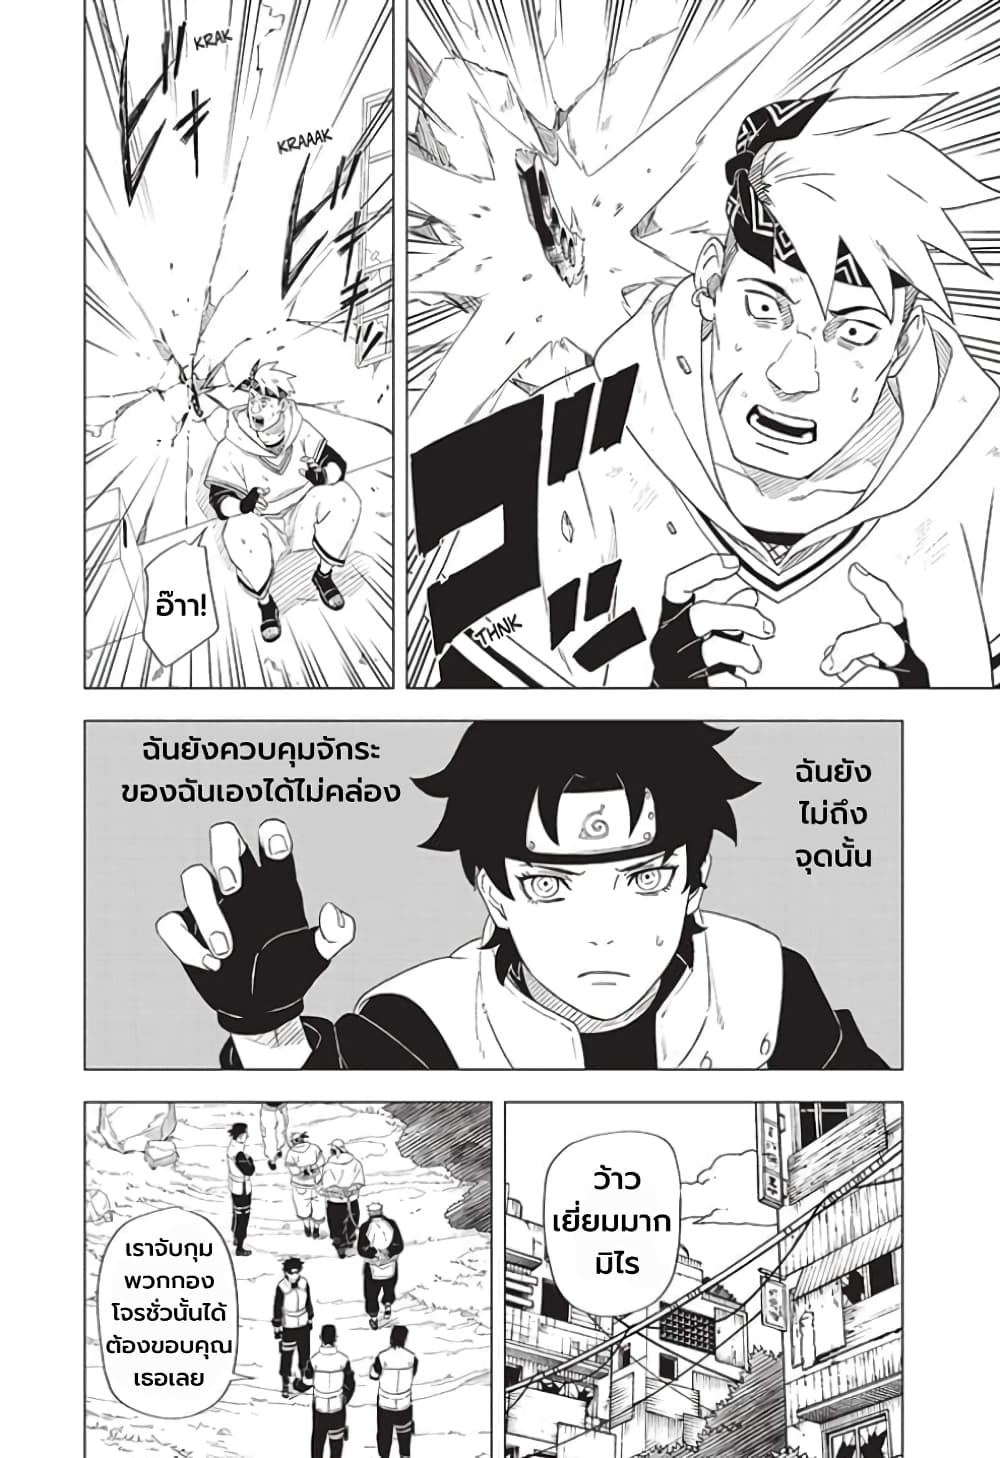 Naruto Konoha’s Story – The Steam Ninja Scrolls The Manga 2 08